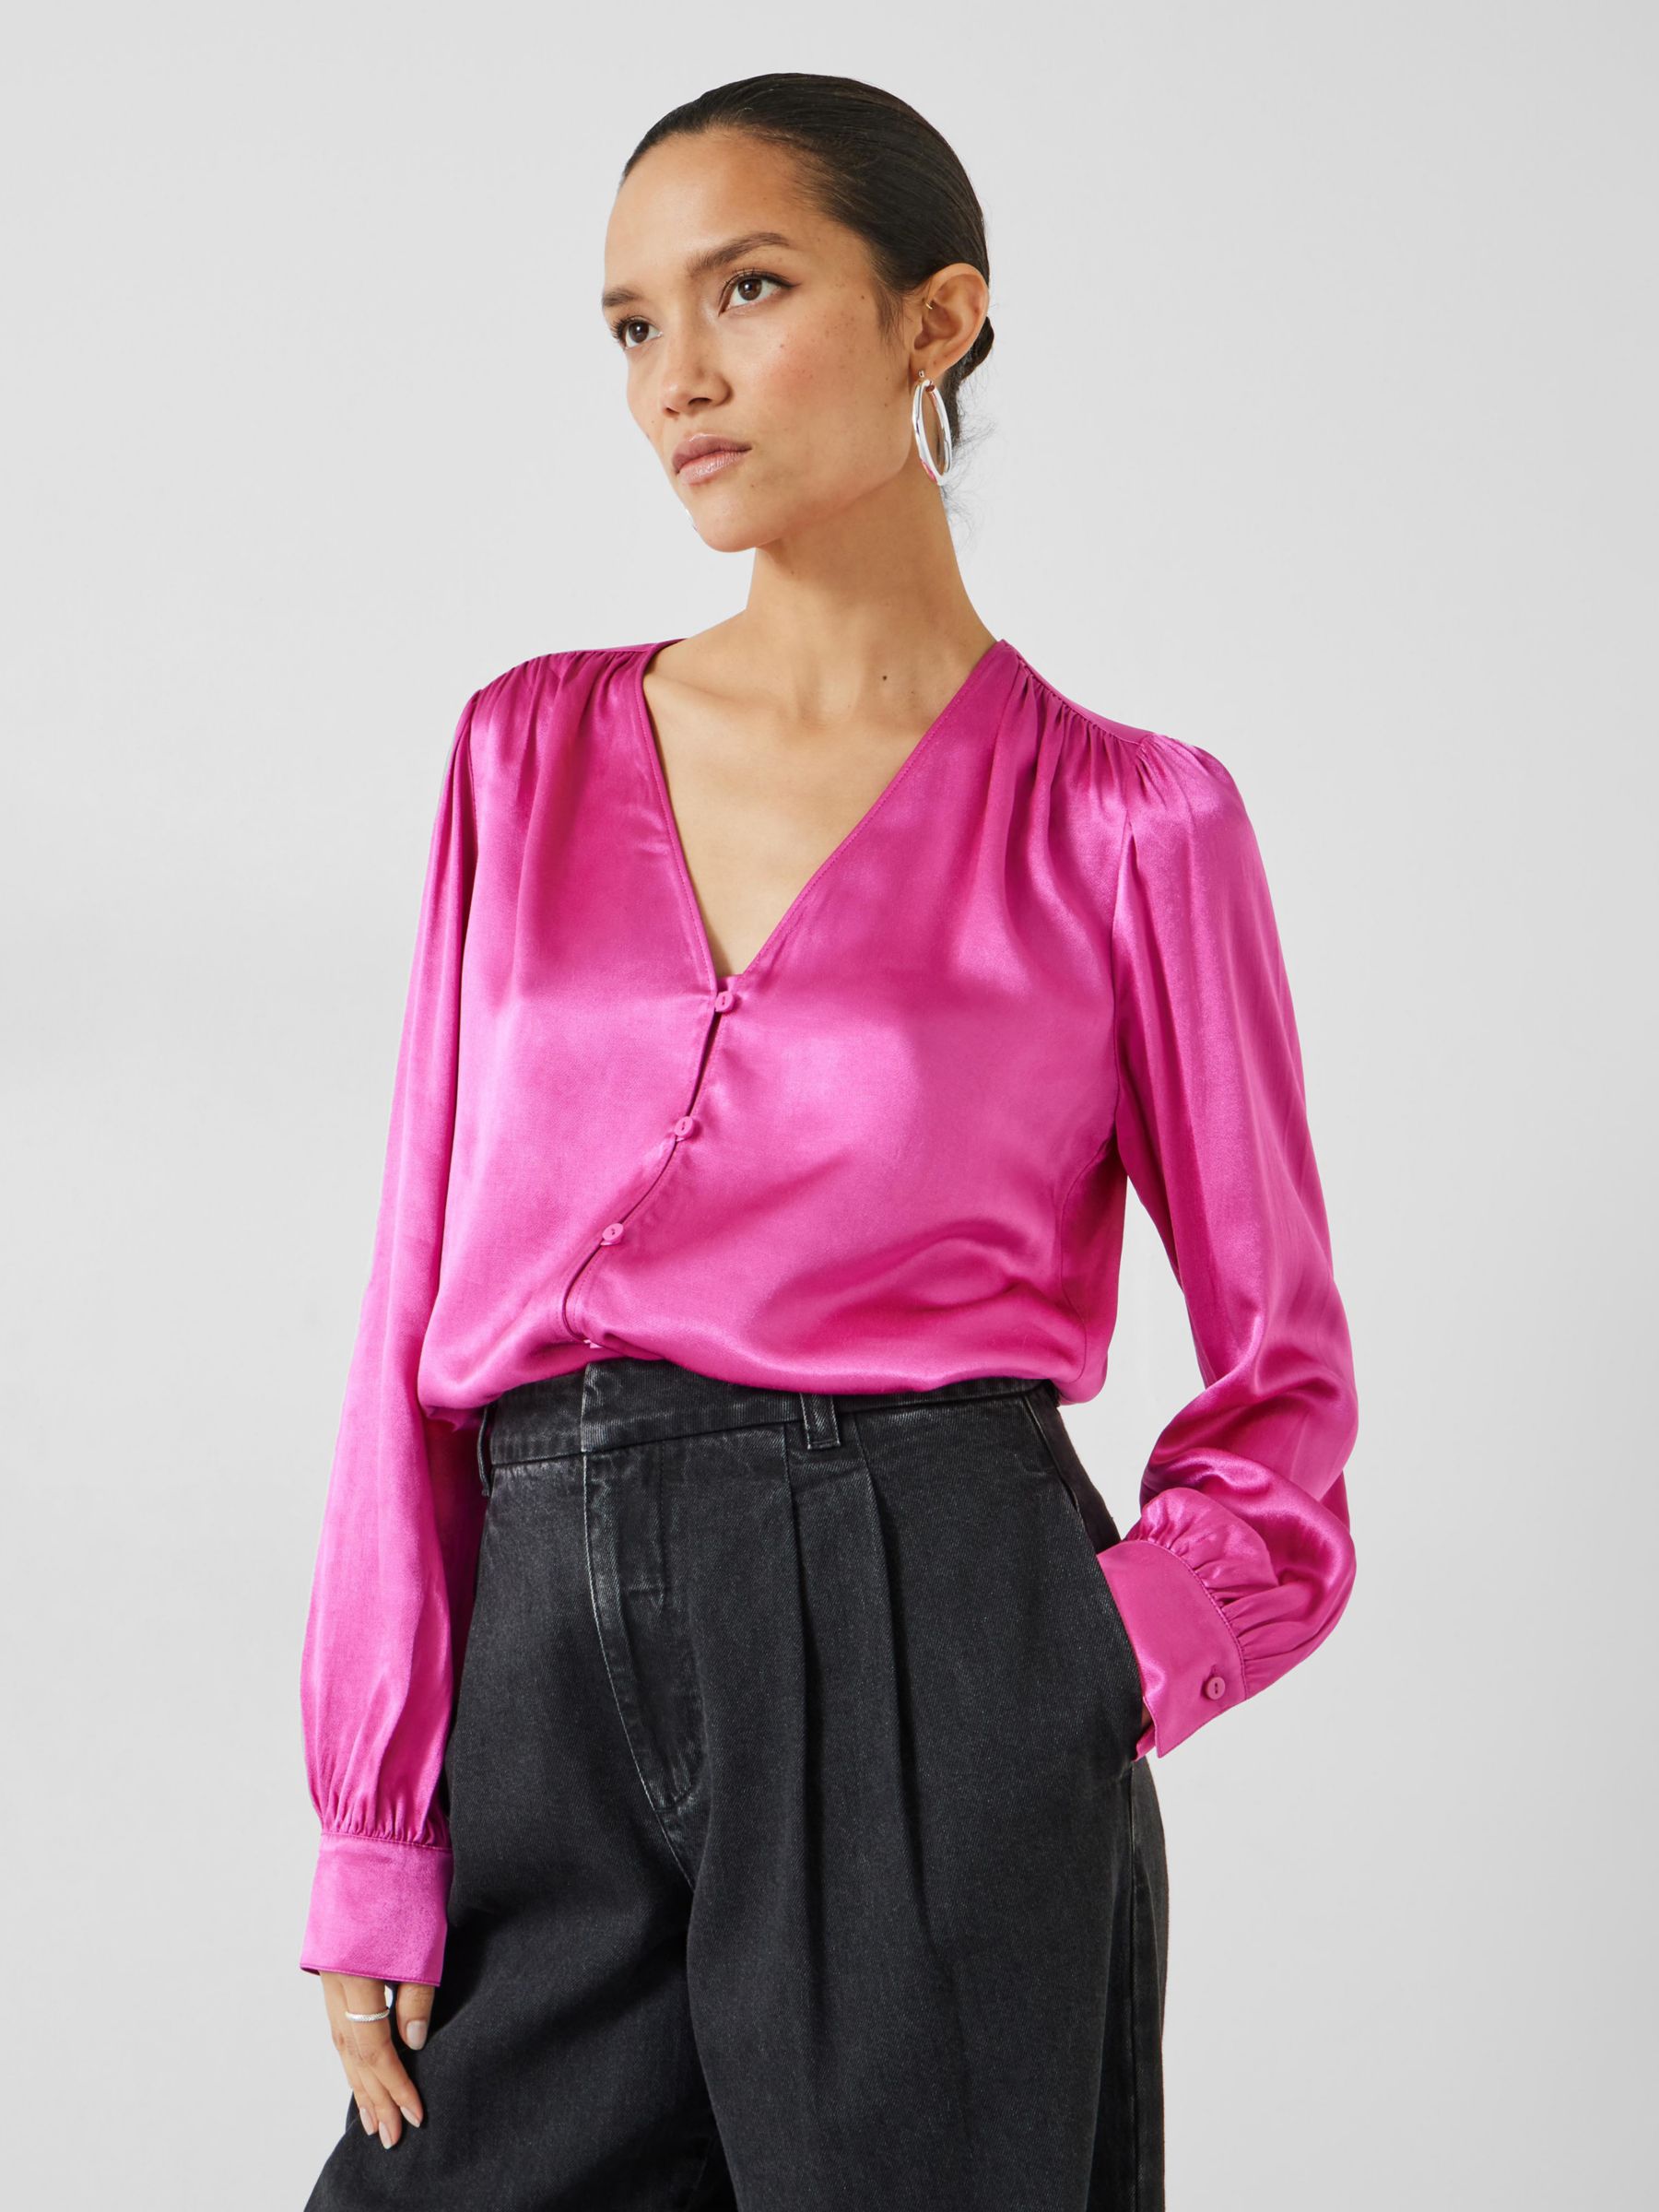 HUSH Priscilla Satin Tie Blouse, Vibrant Pink at John Lewis & Partners